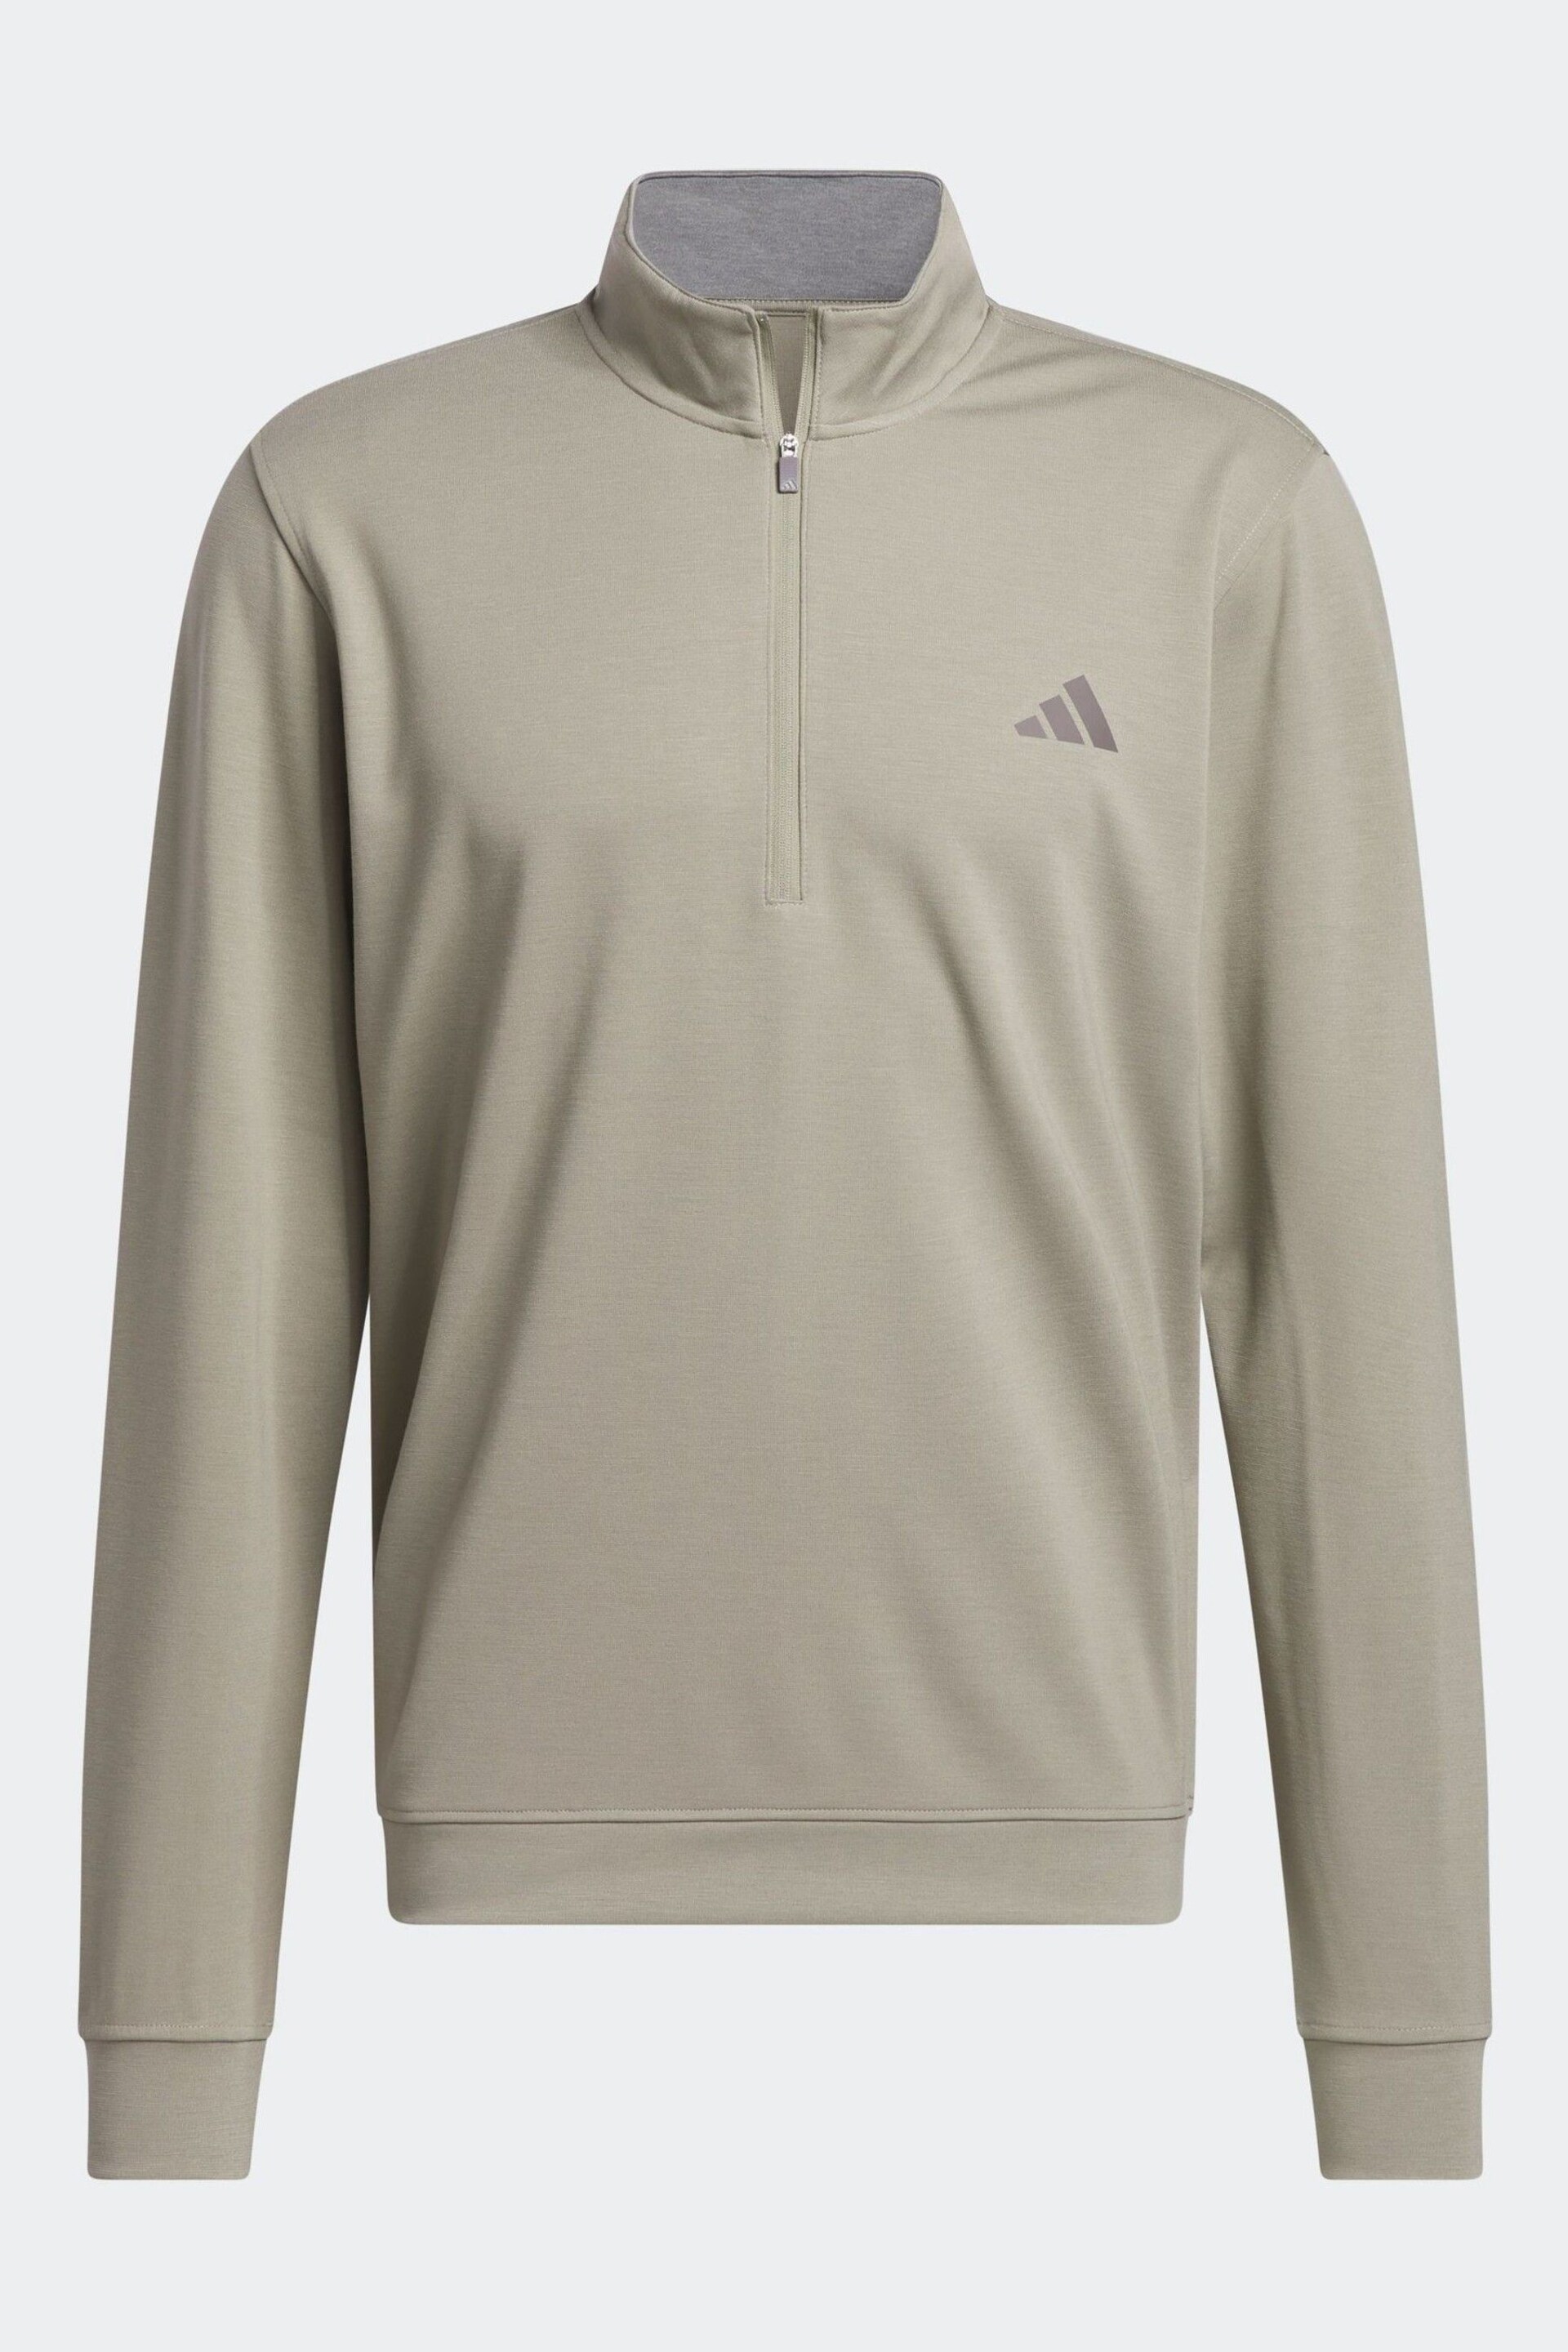 adidas Golf Elevated 1/4-Zip Black Sweatshirt - Image 7 of 7